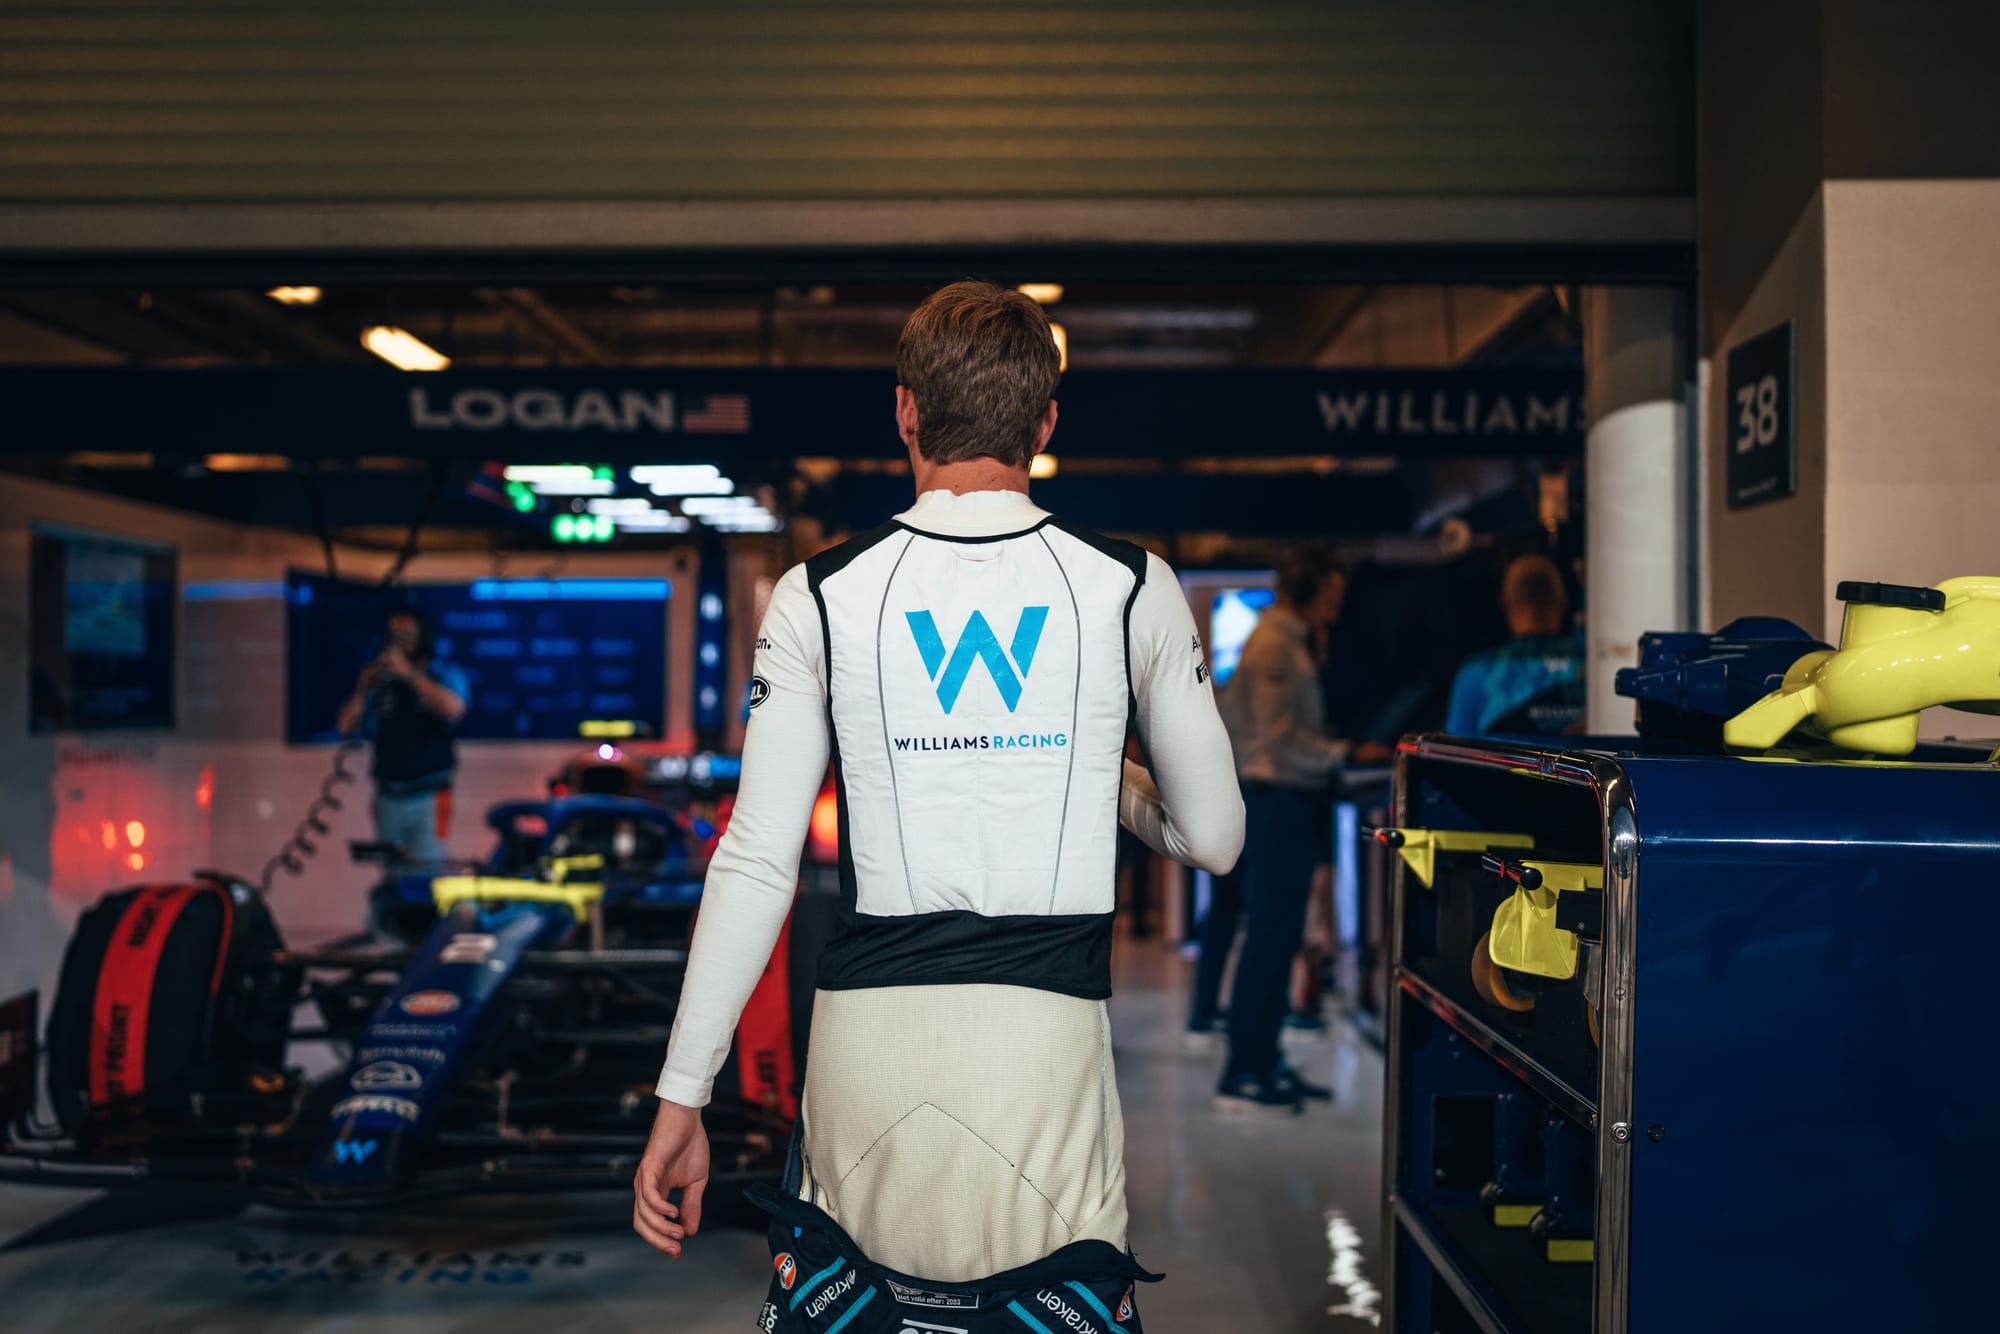 Williams Racing Store